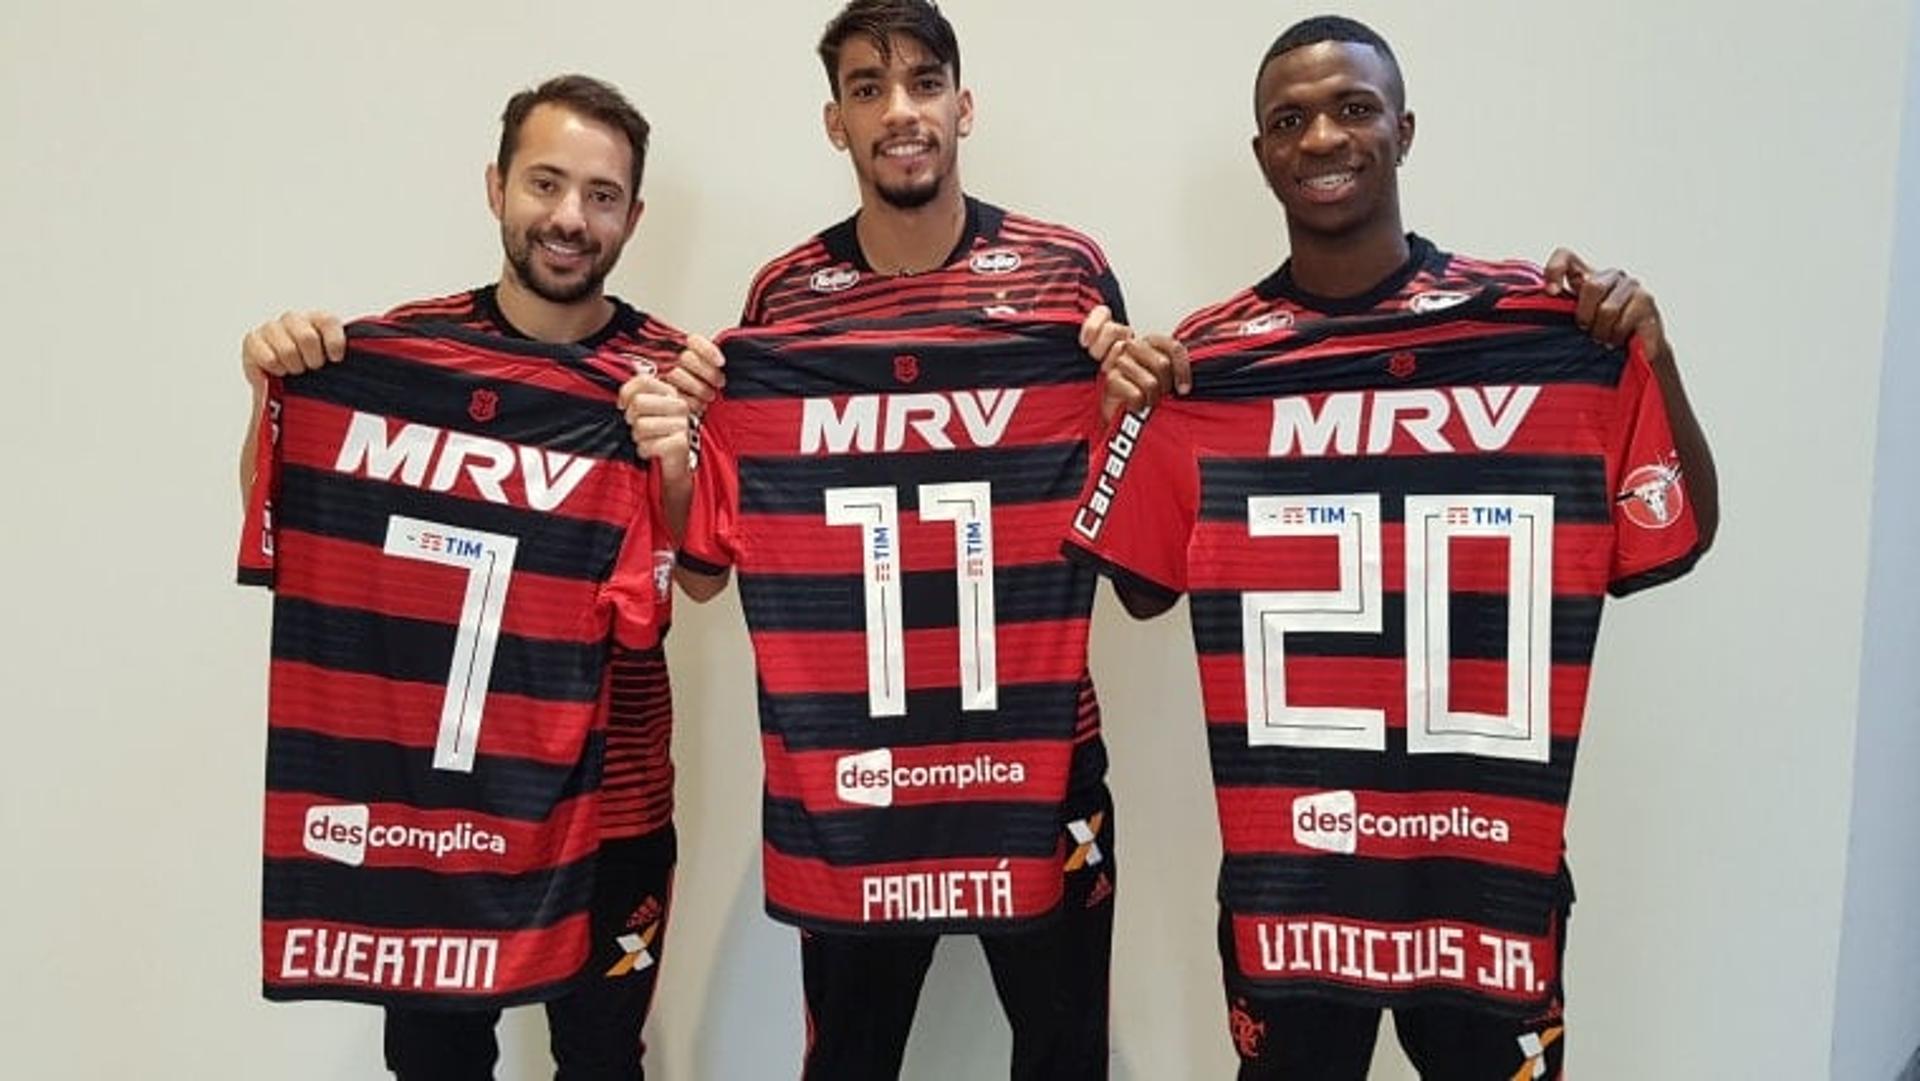 Descomplica: novo patrocinador do Flamengo